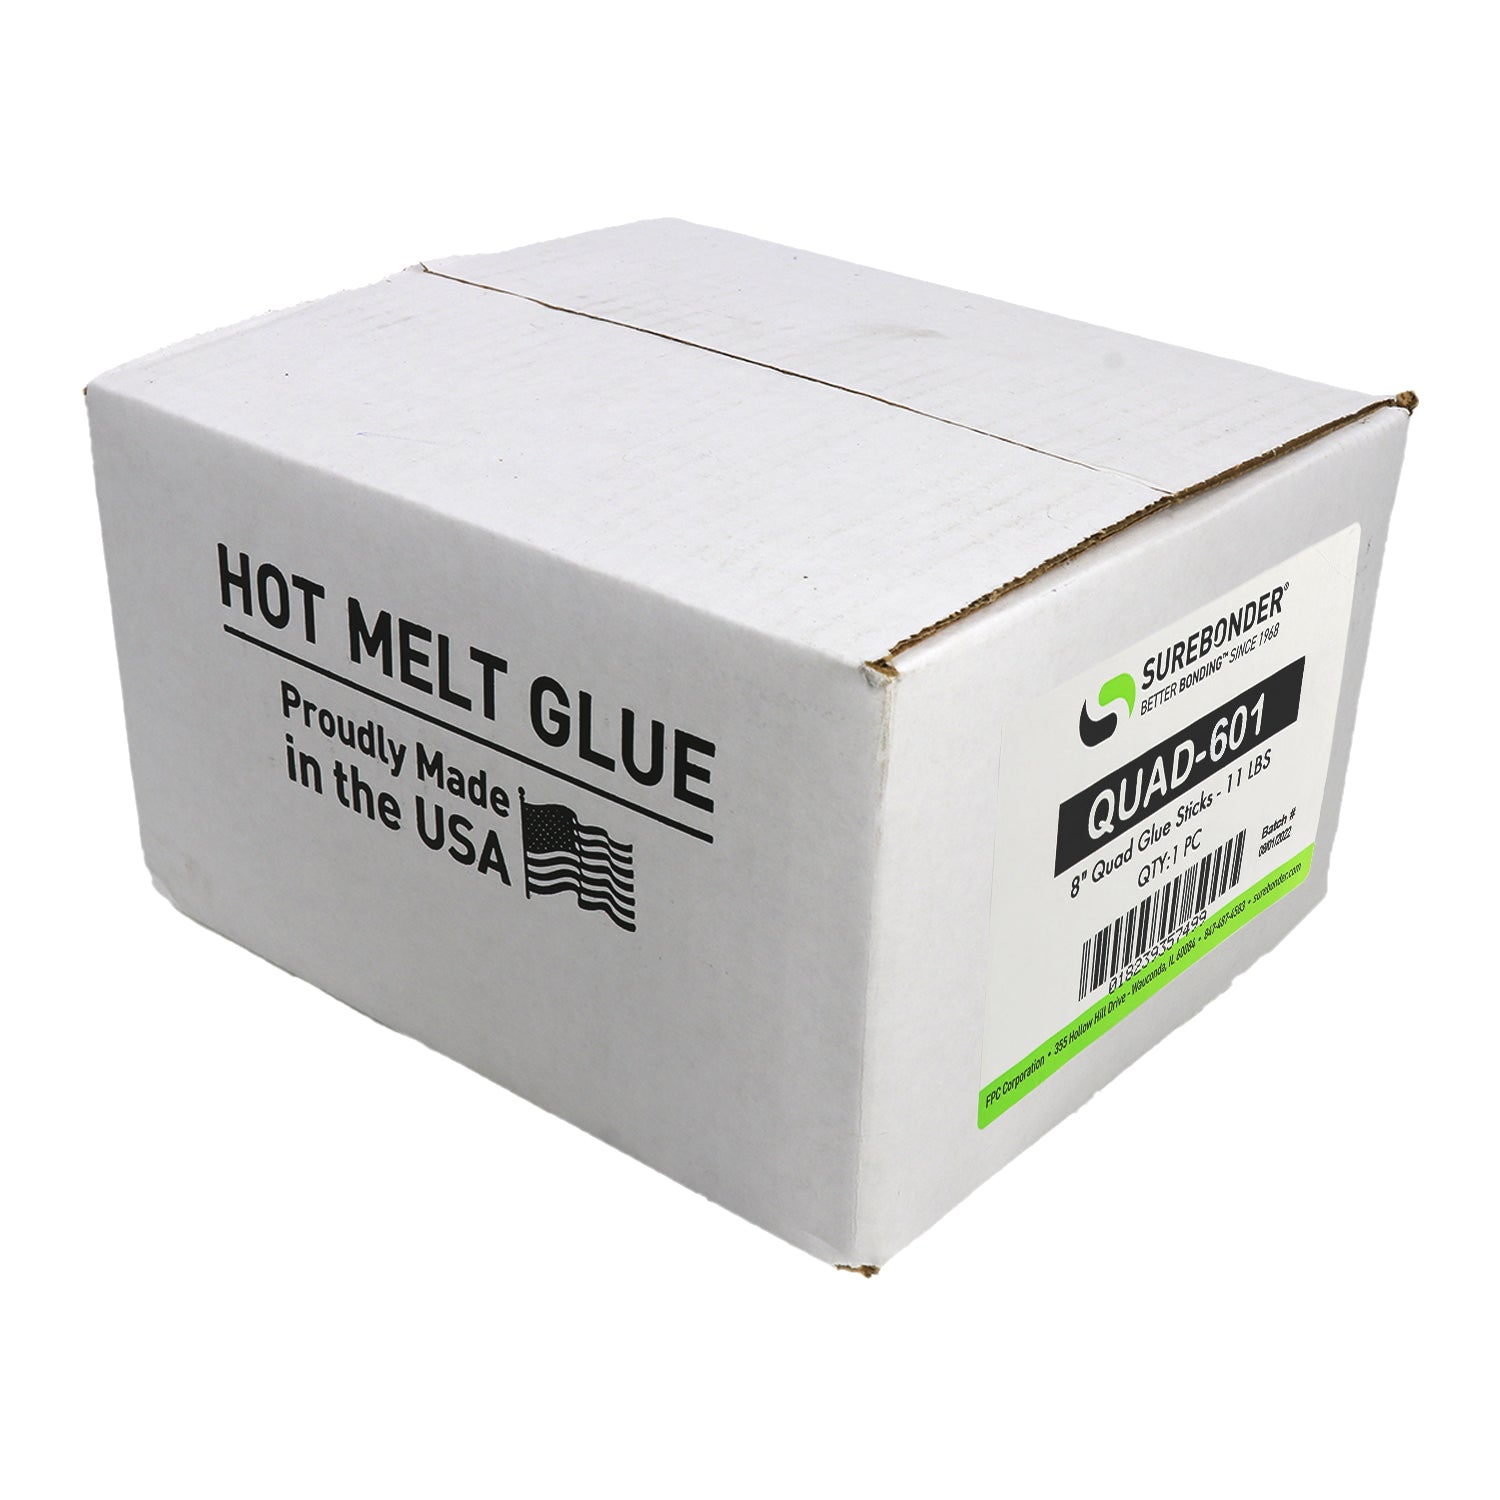 QUAD-601 Low Melt Temperature Fast Set Bulk Hot Melt Glue Sticks - 8 Quad  Stick - 11 lbs - Tan